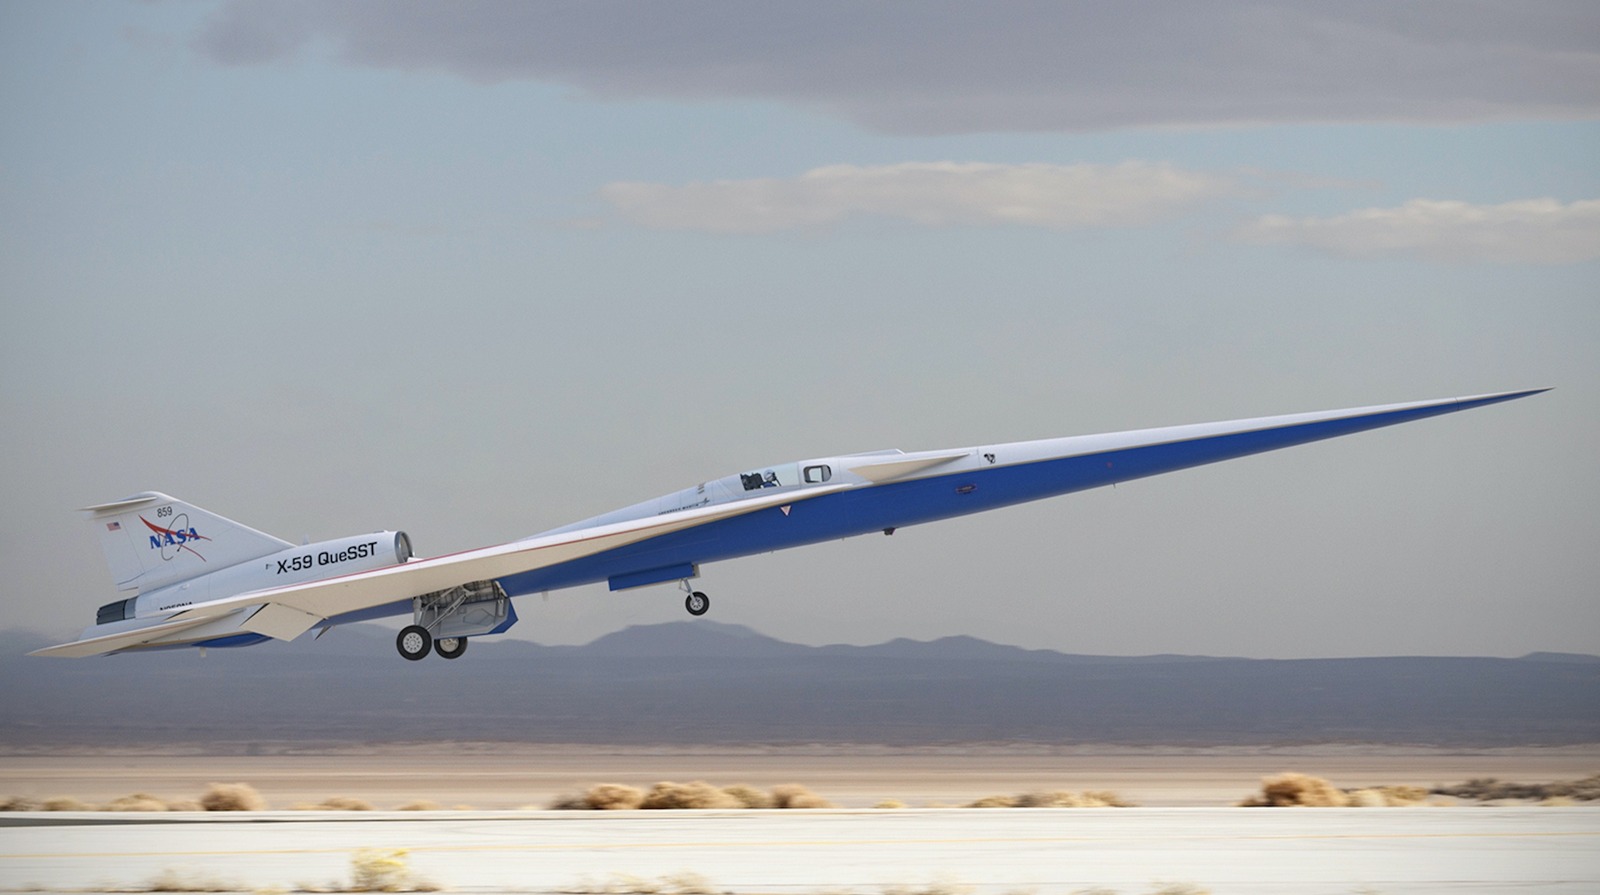 NASA’s X-59 Supersonic Plane Gets Powerful Engine For Quieter Flight – SlashGear